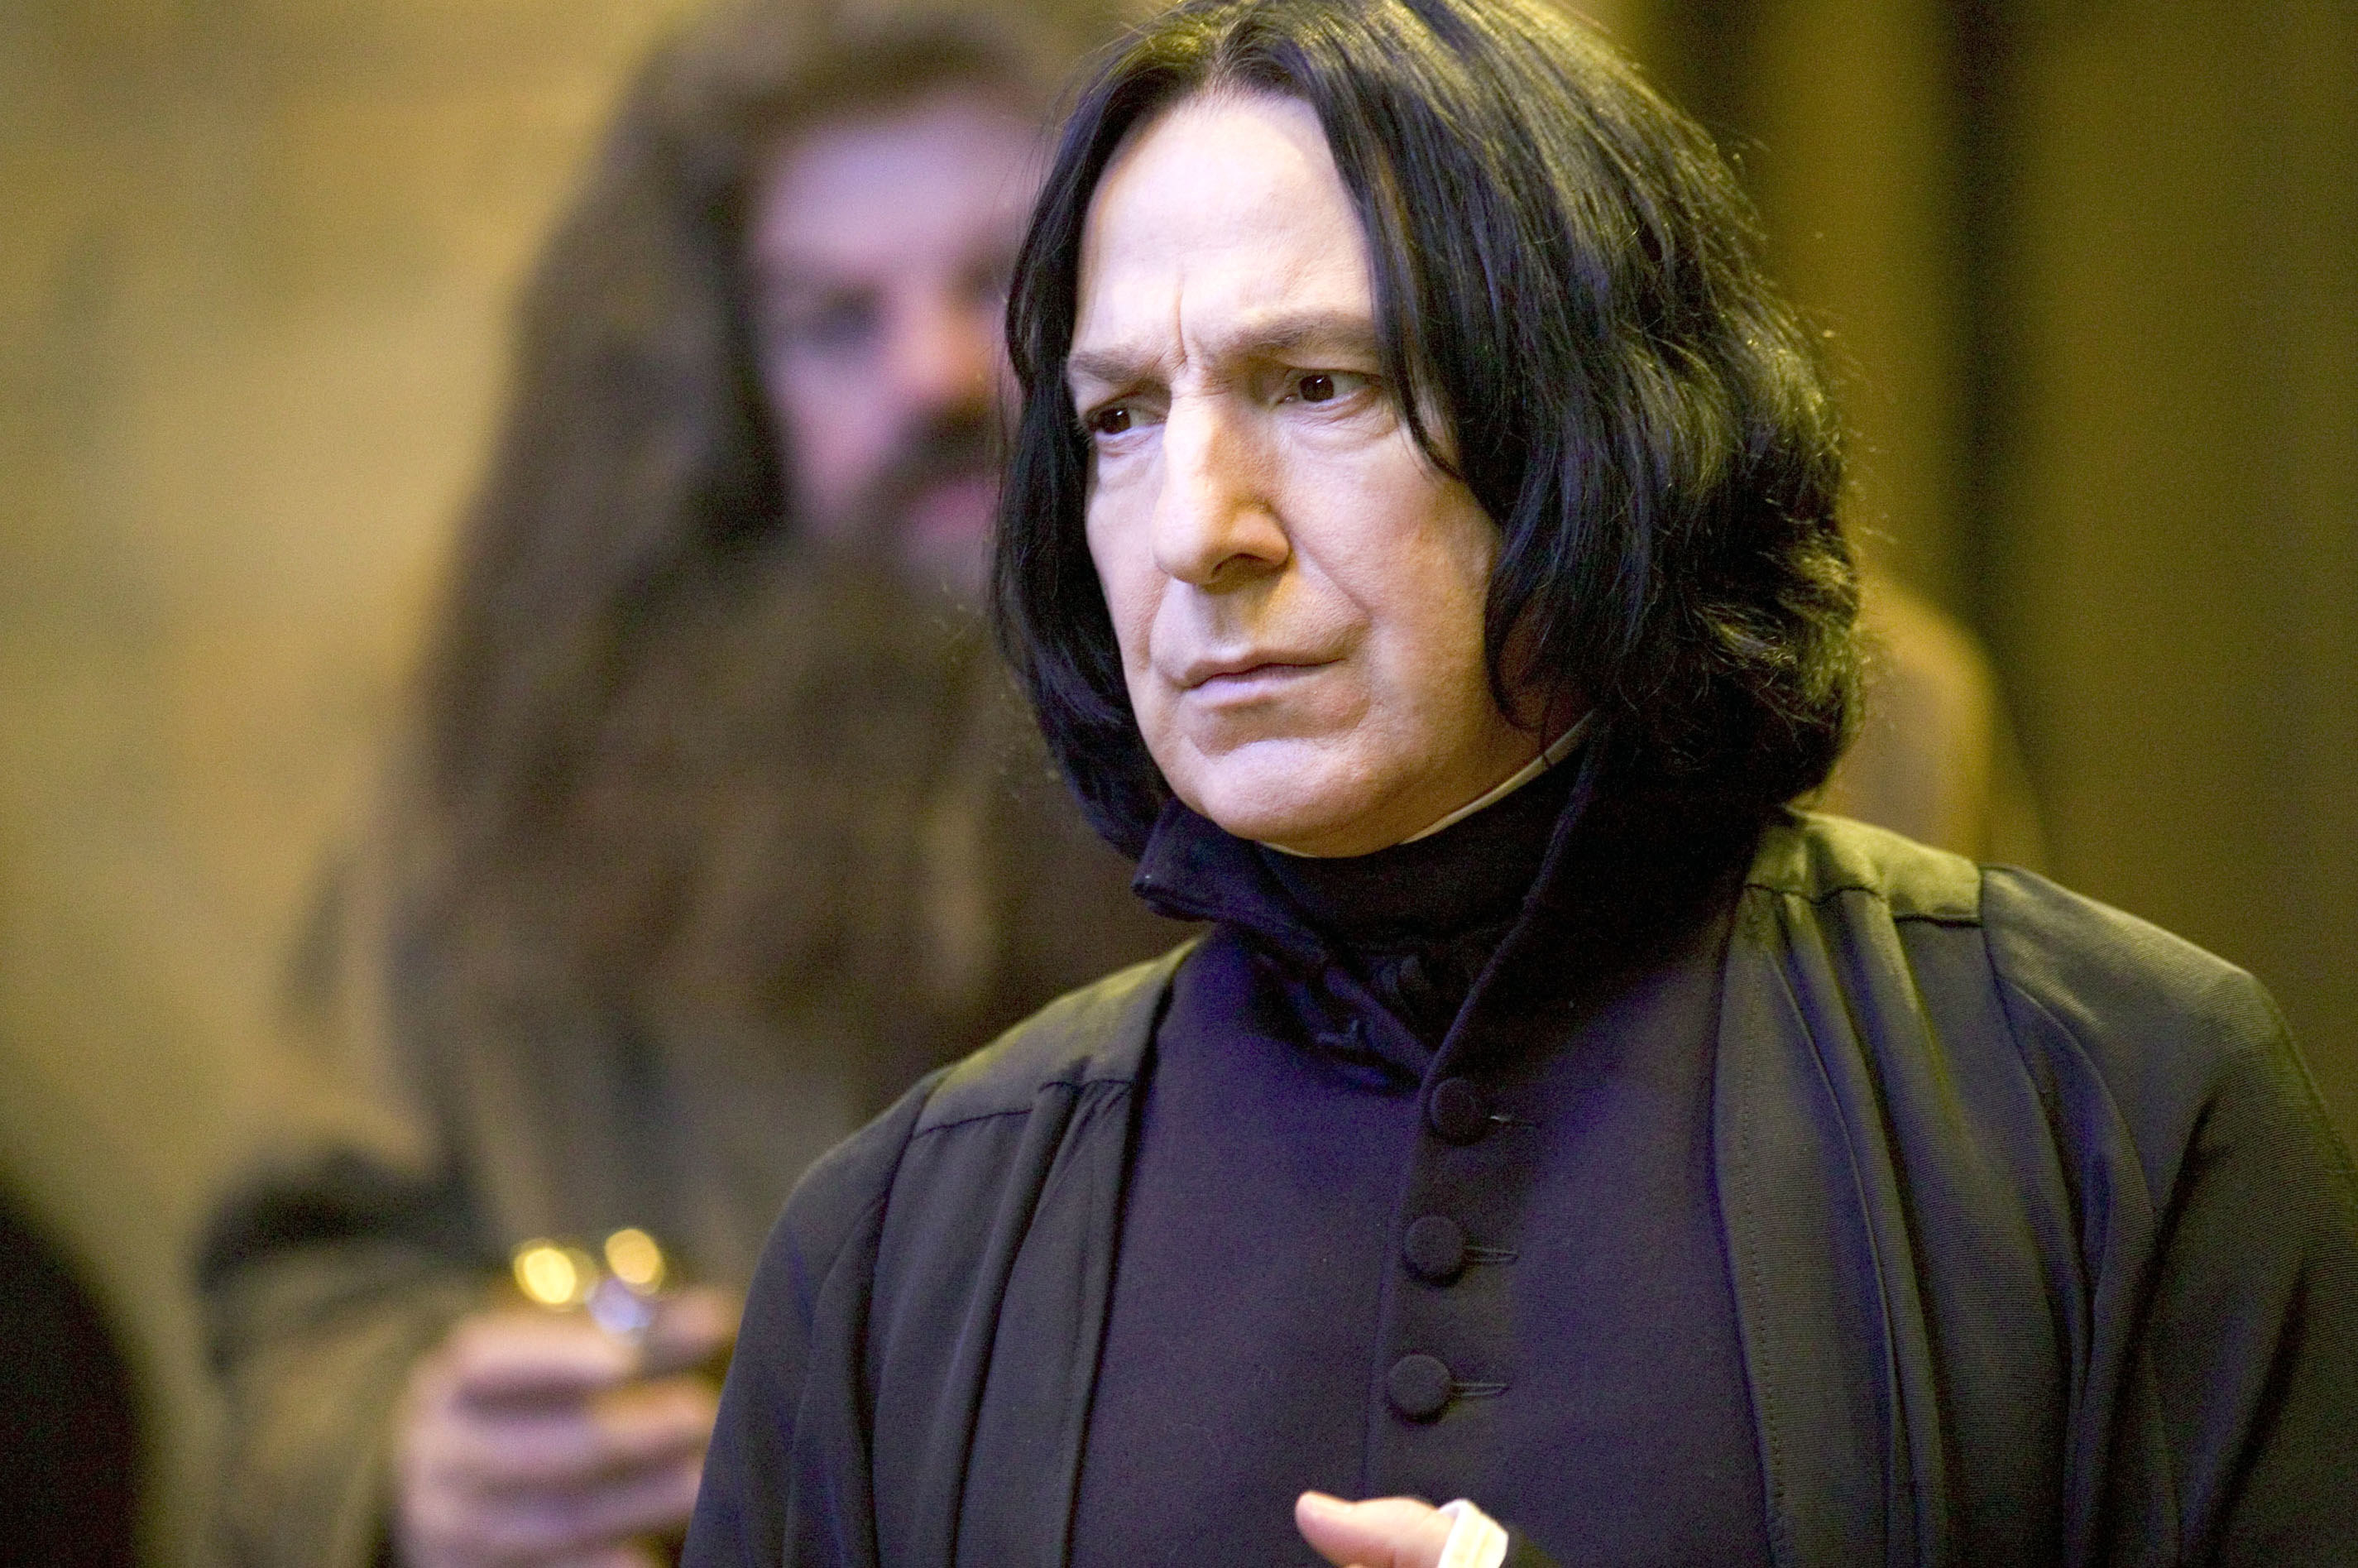 Alan as Severus looking serious